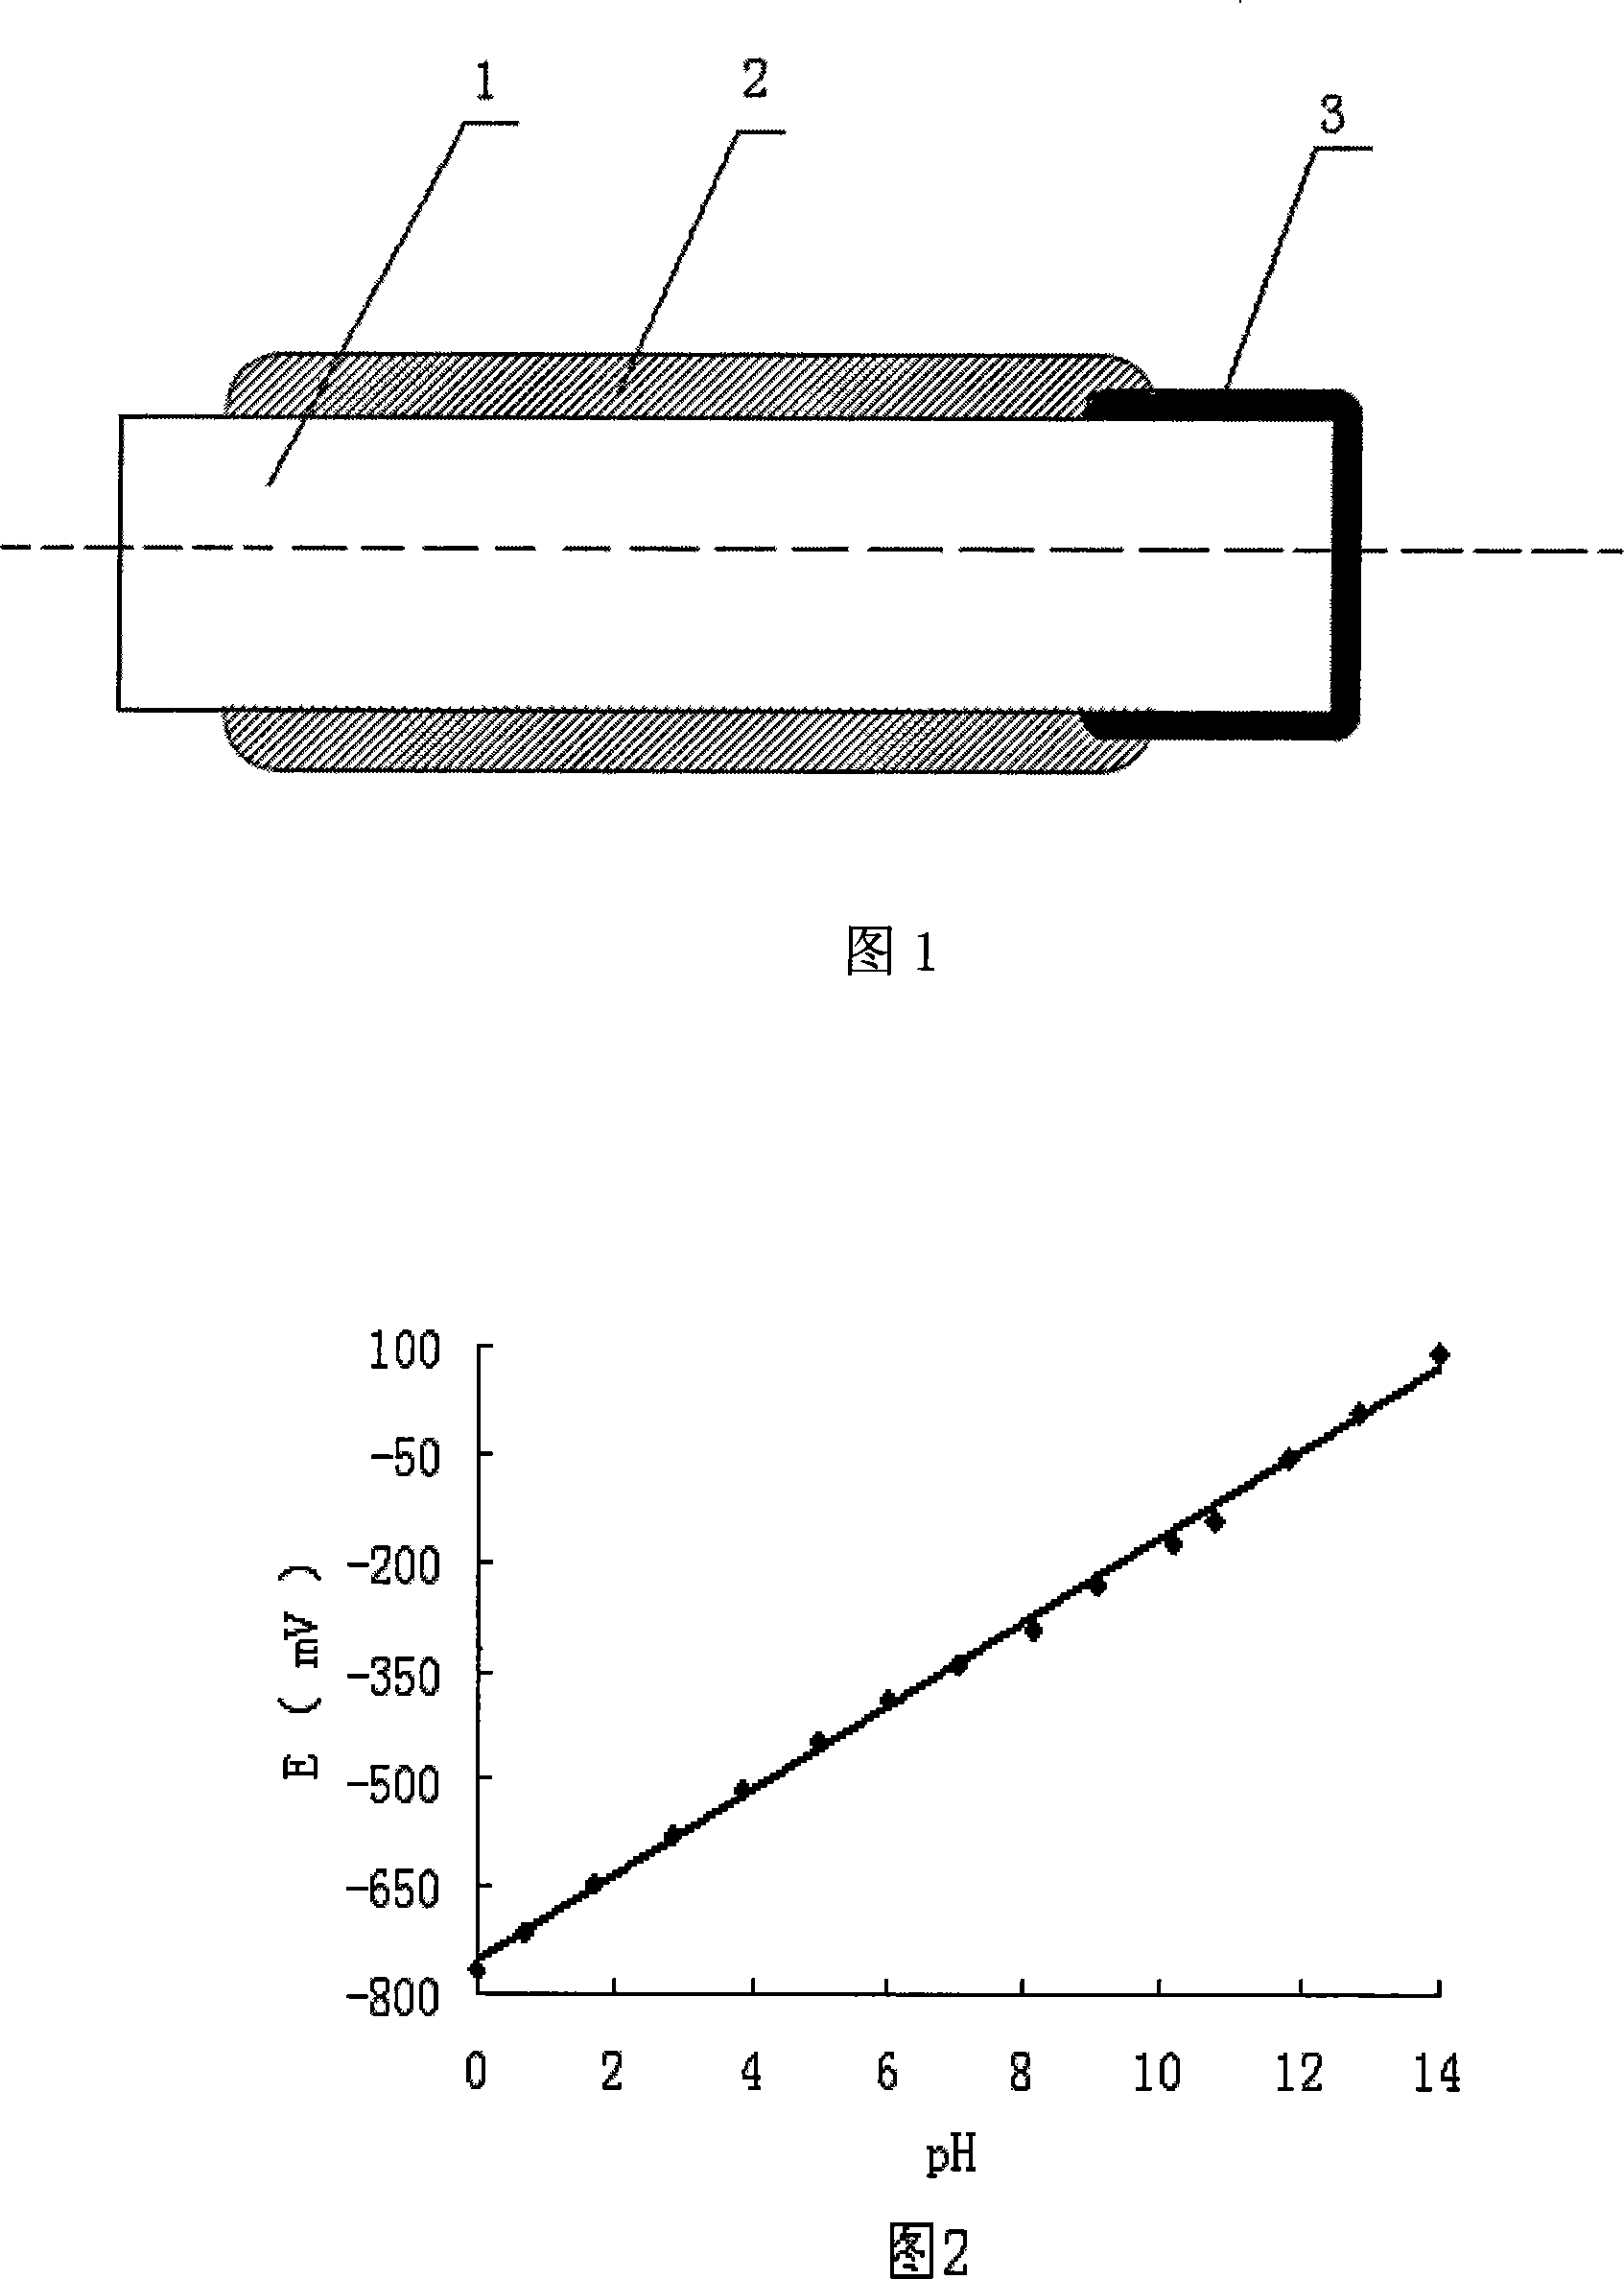 Metal-metallic oxide pH electrode and method for making same